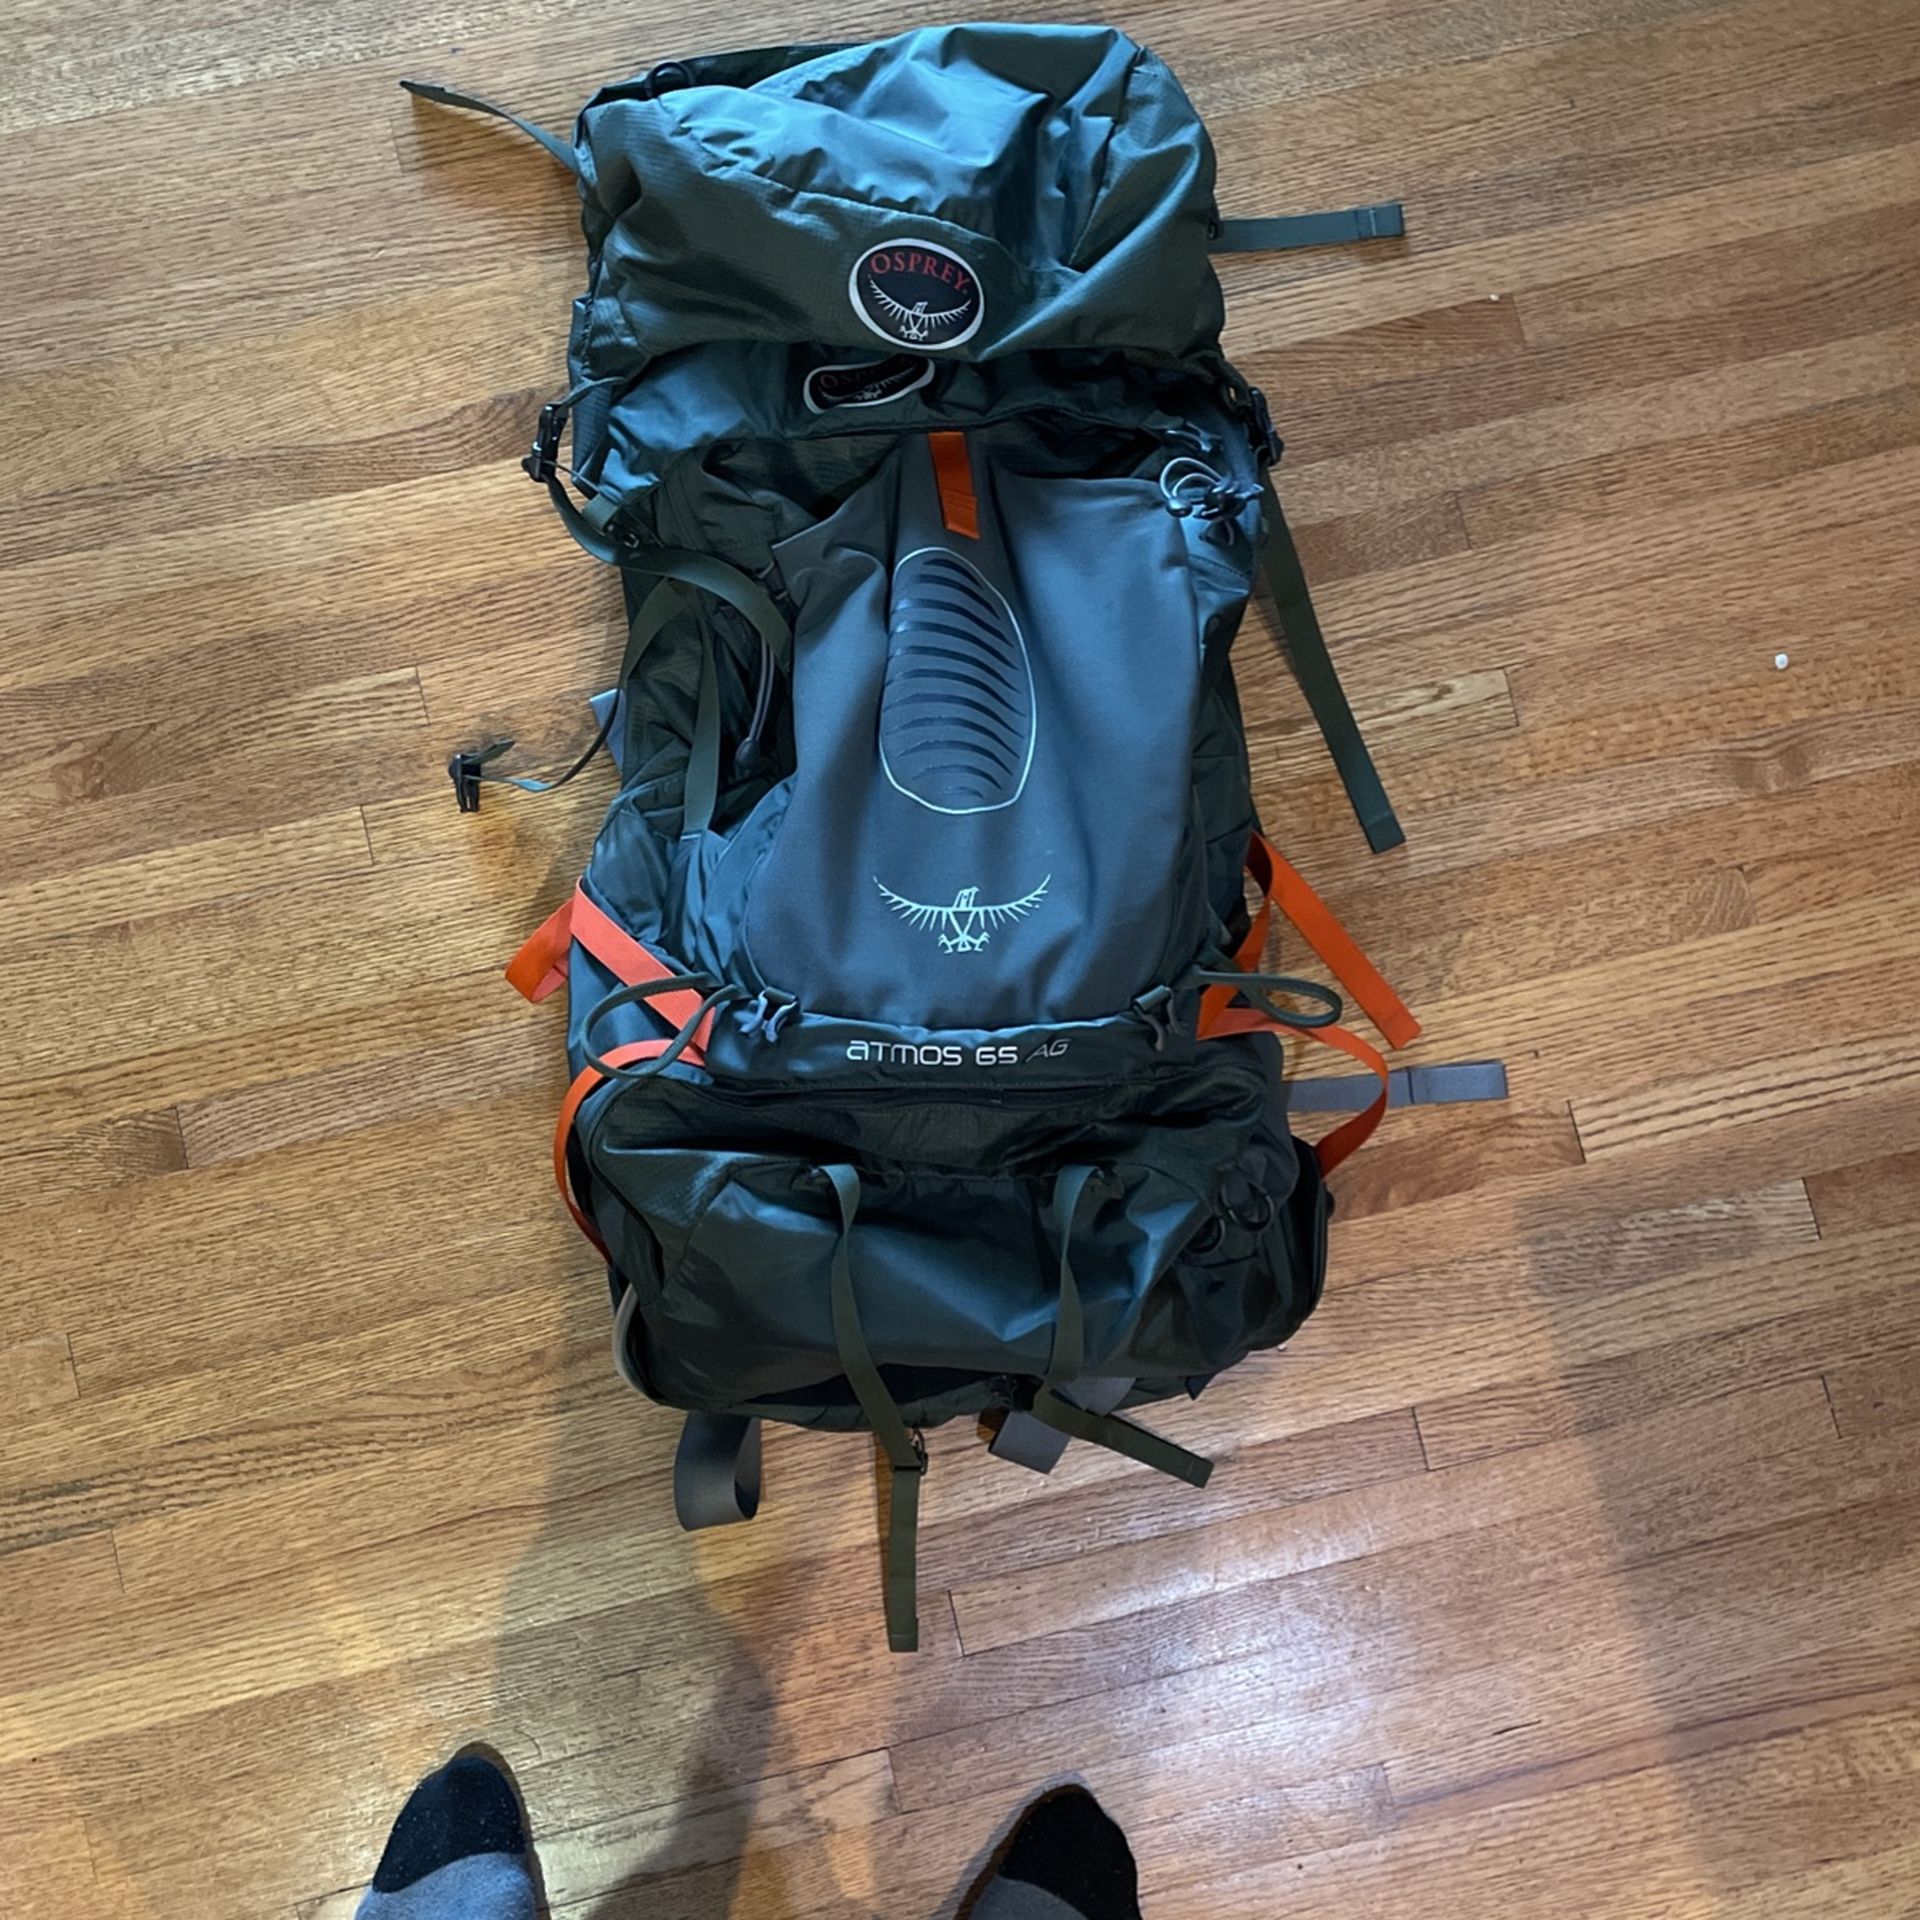 Osprey Atmos 65 AG Backpacking Bag